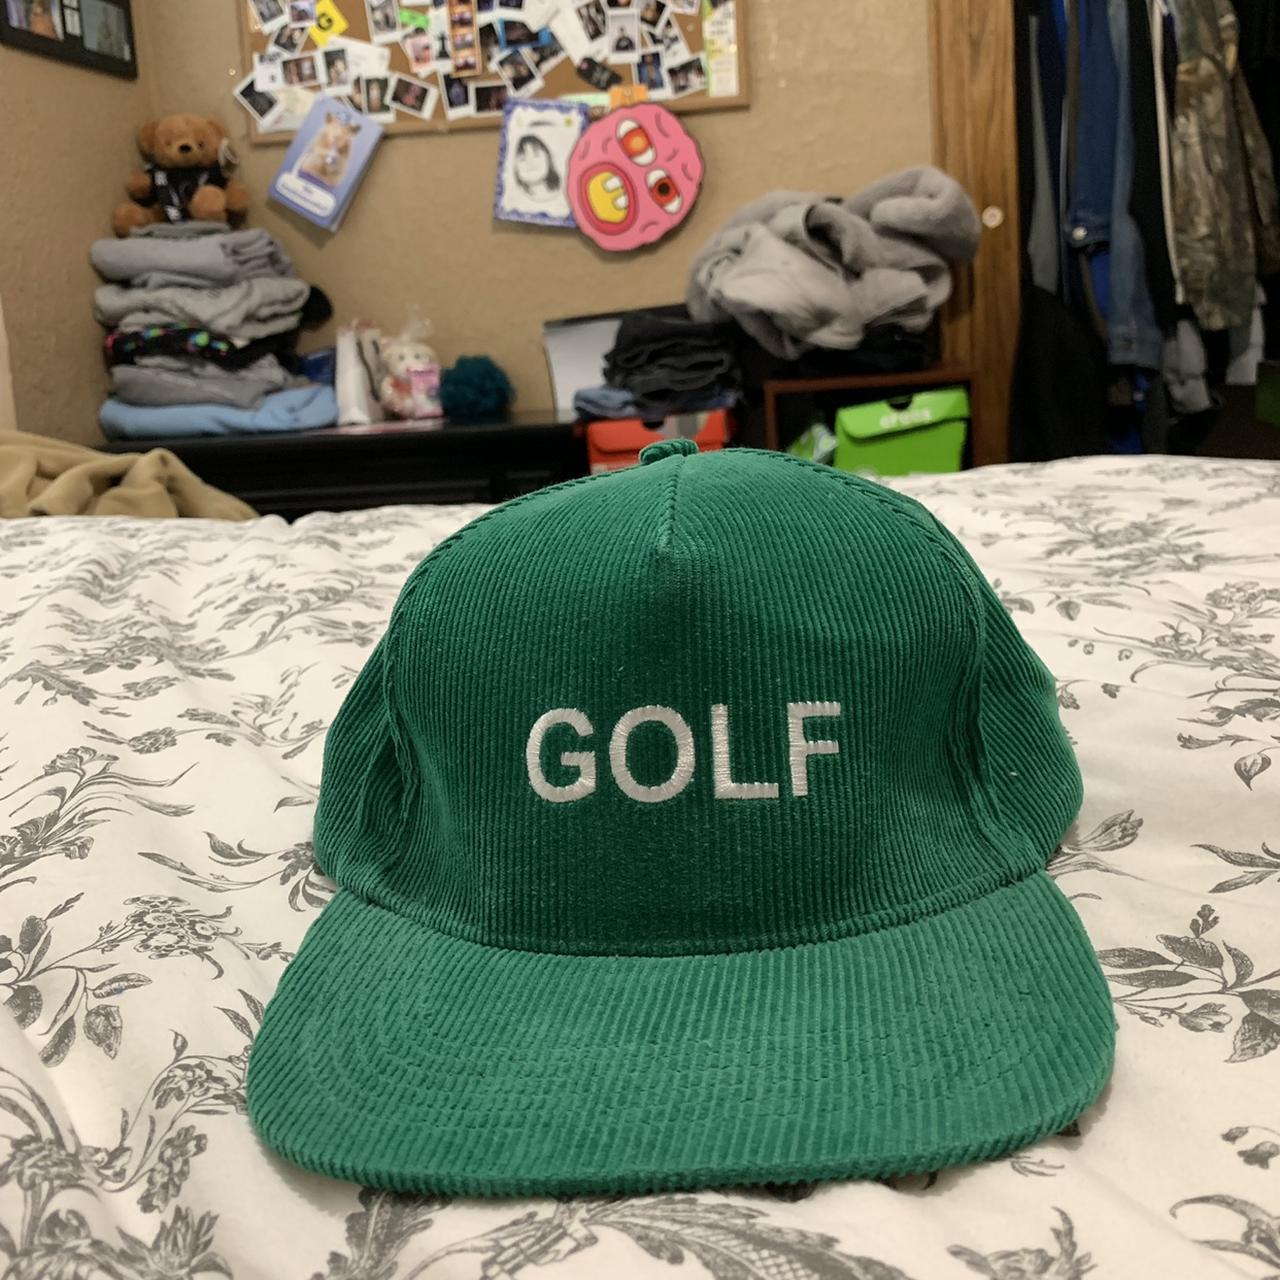 Tyler the Creator 'GOLF WANG' Cap/hat in Green 